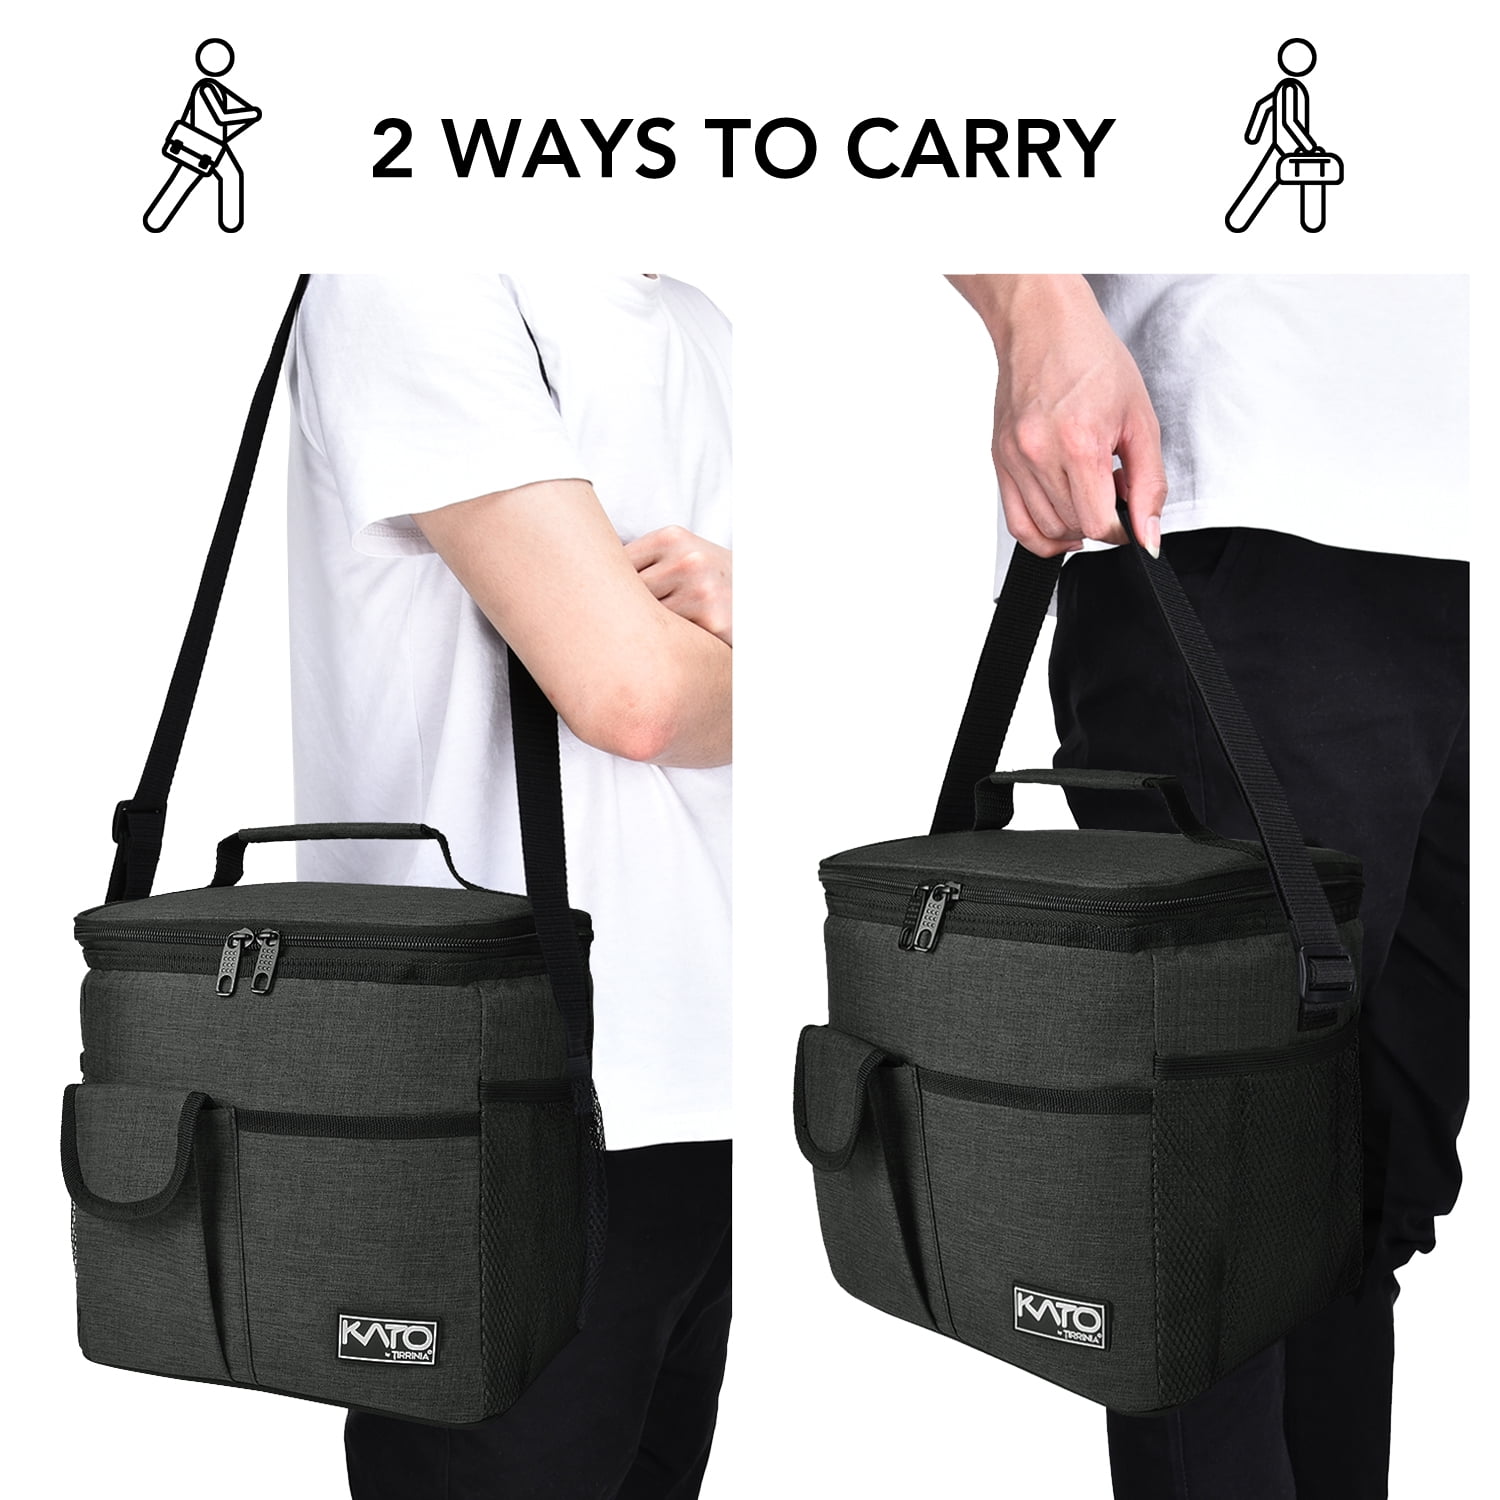 ECHSRT Insulated Lunch Bag Women/Men, 10L Reusable Lunch Tote Bag